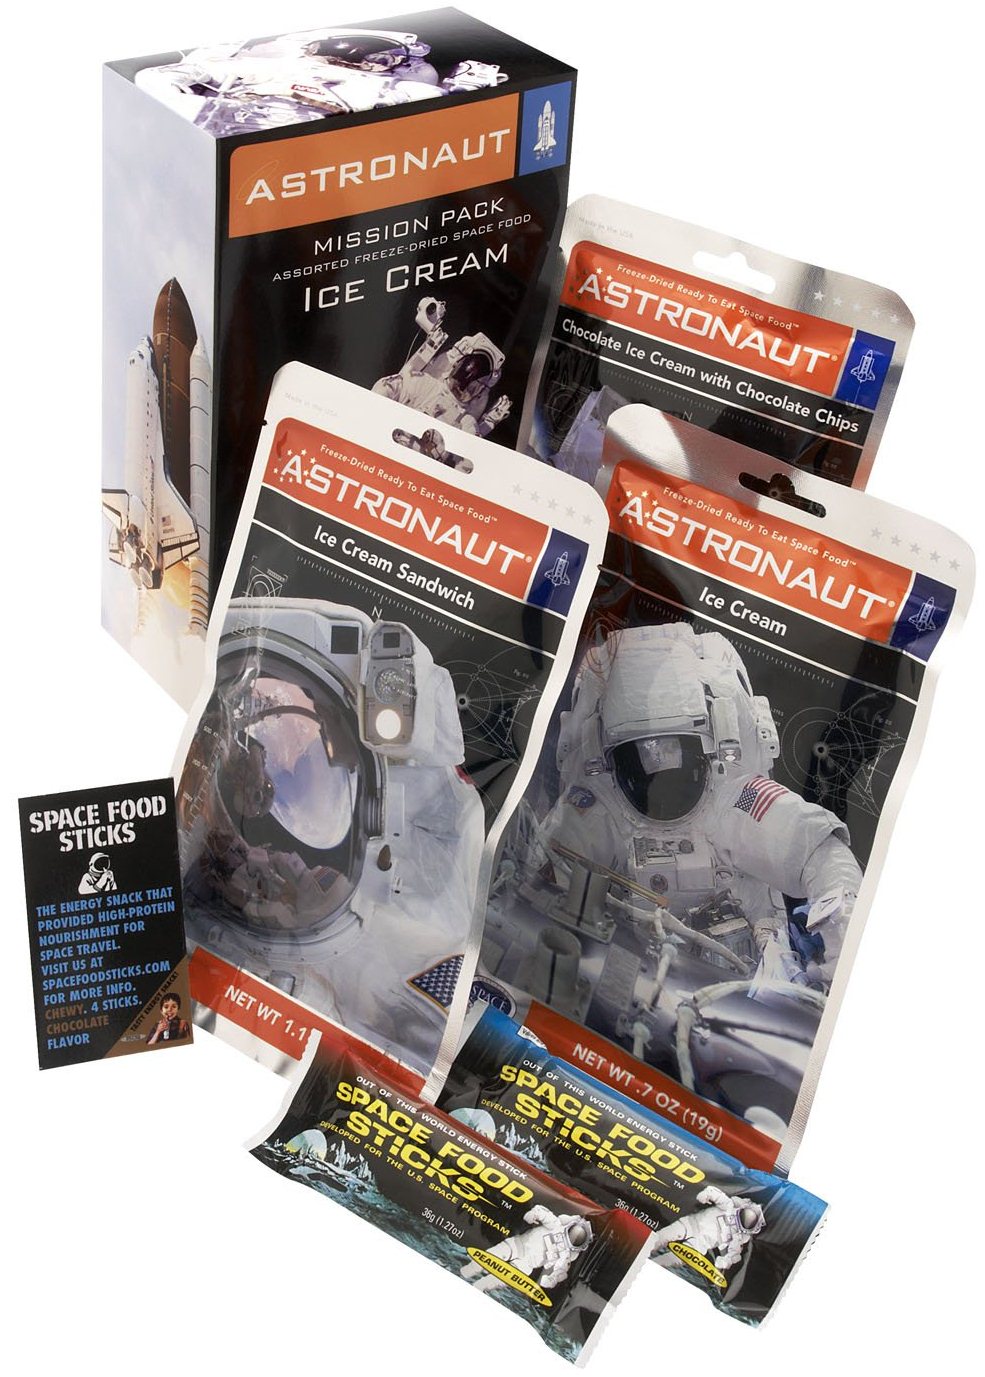 Best NASA Gift Idea Mission Pack Astronaut Food Sampler Pack